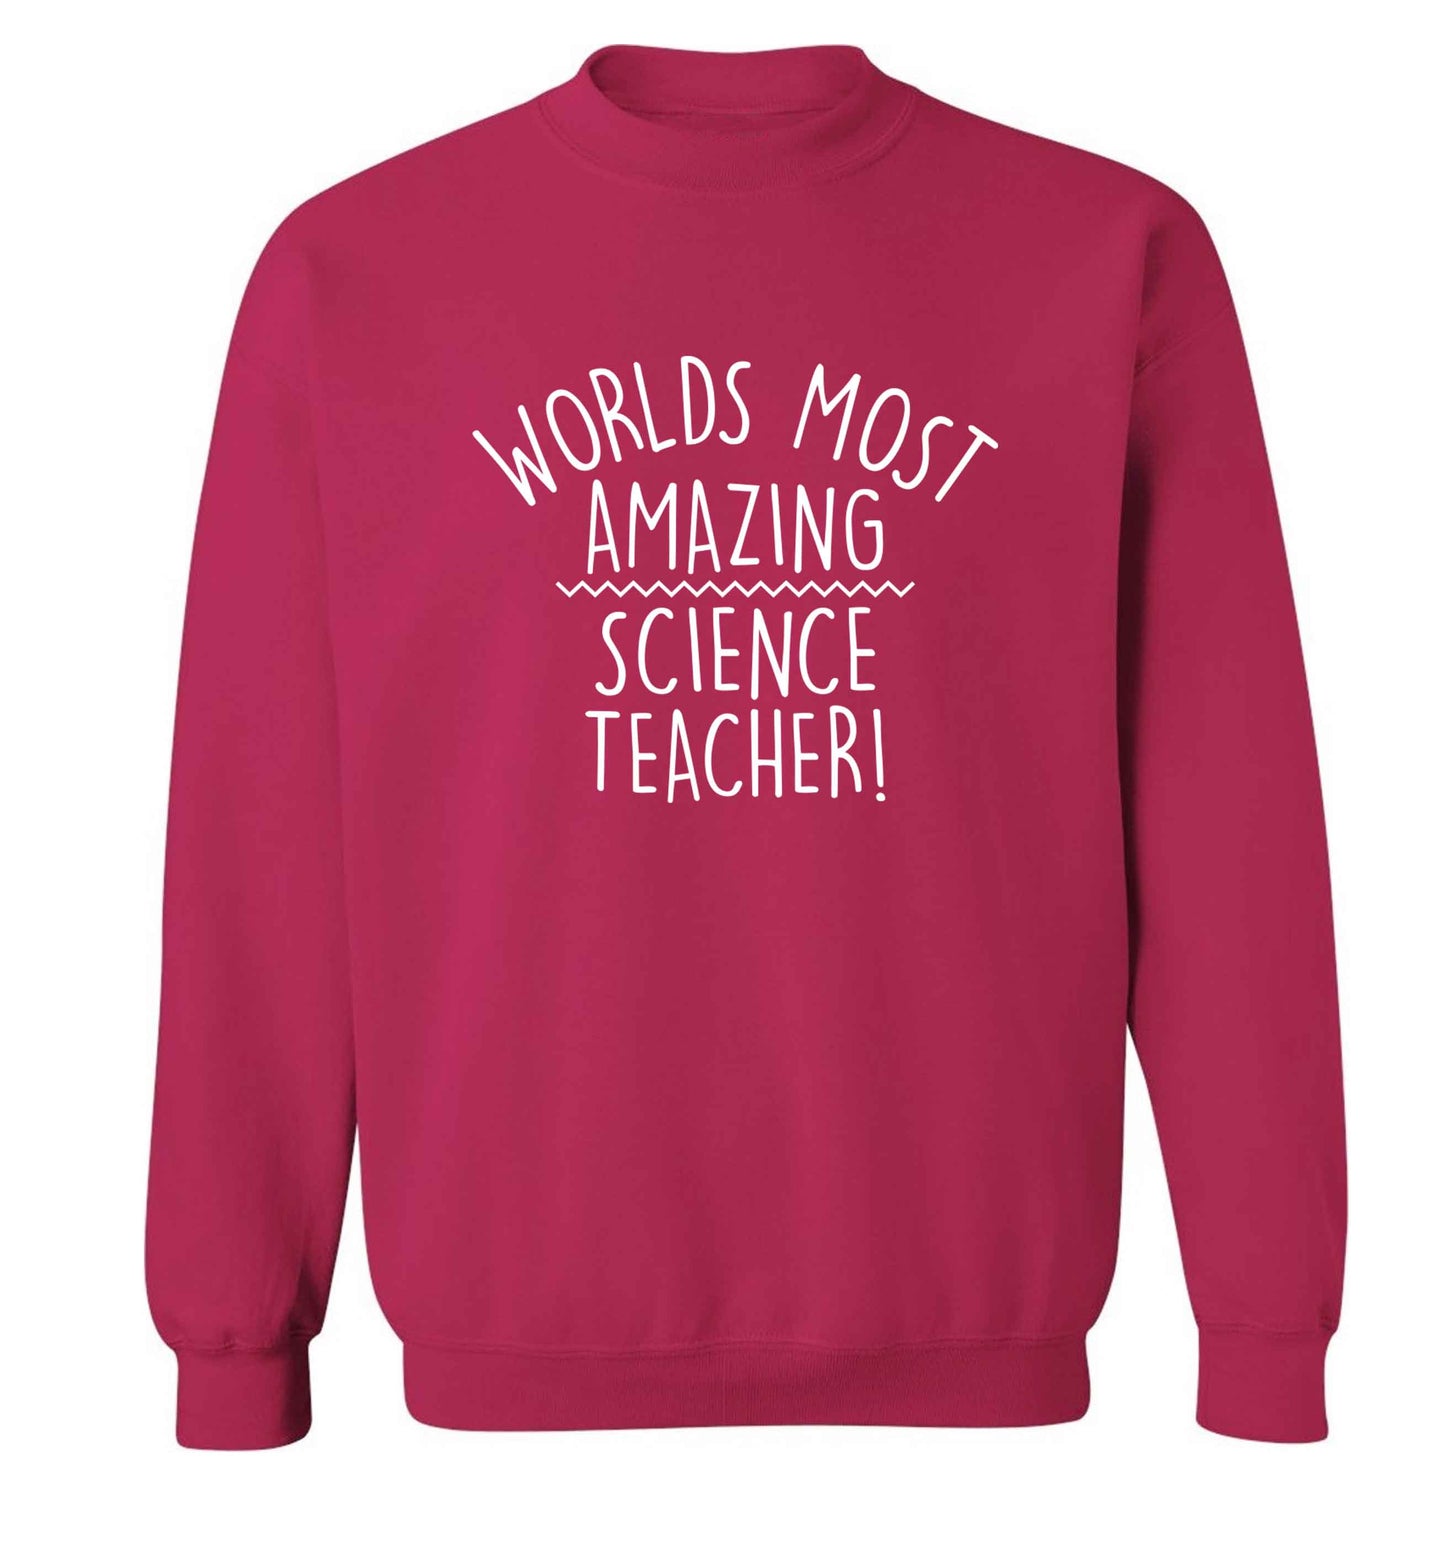 Worlds most amazing science teacher adult's unisex pink sweater 2XL